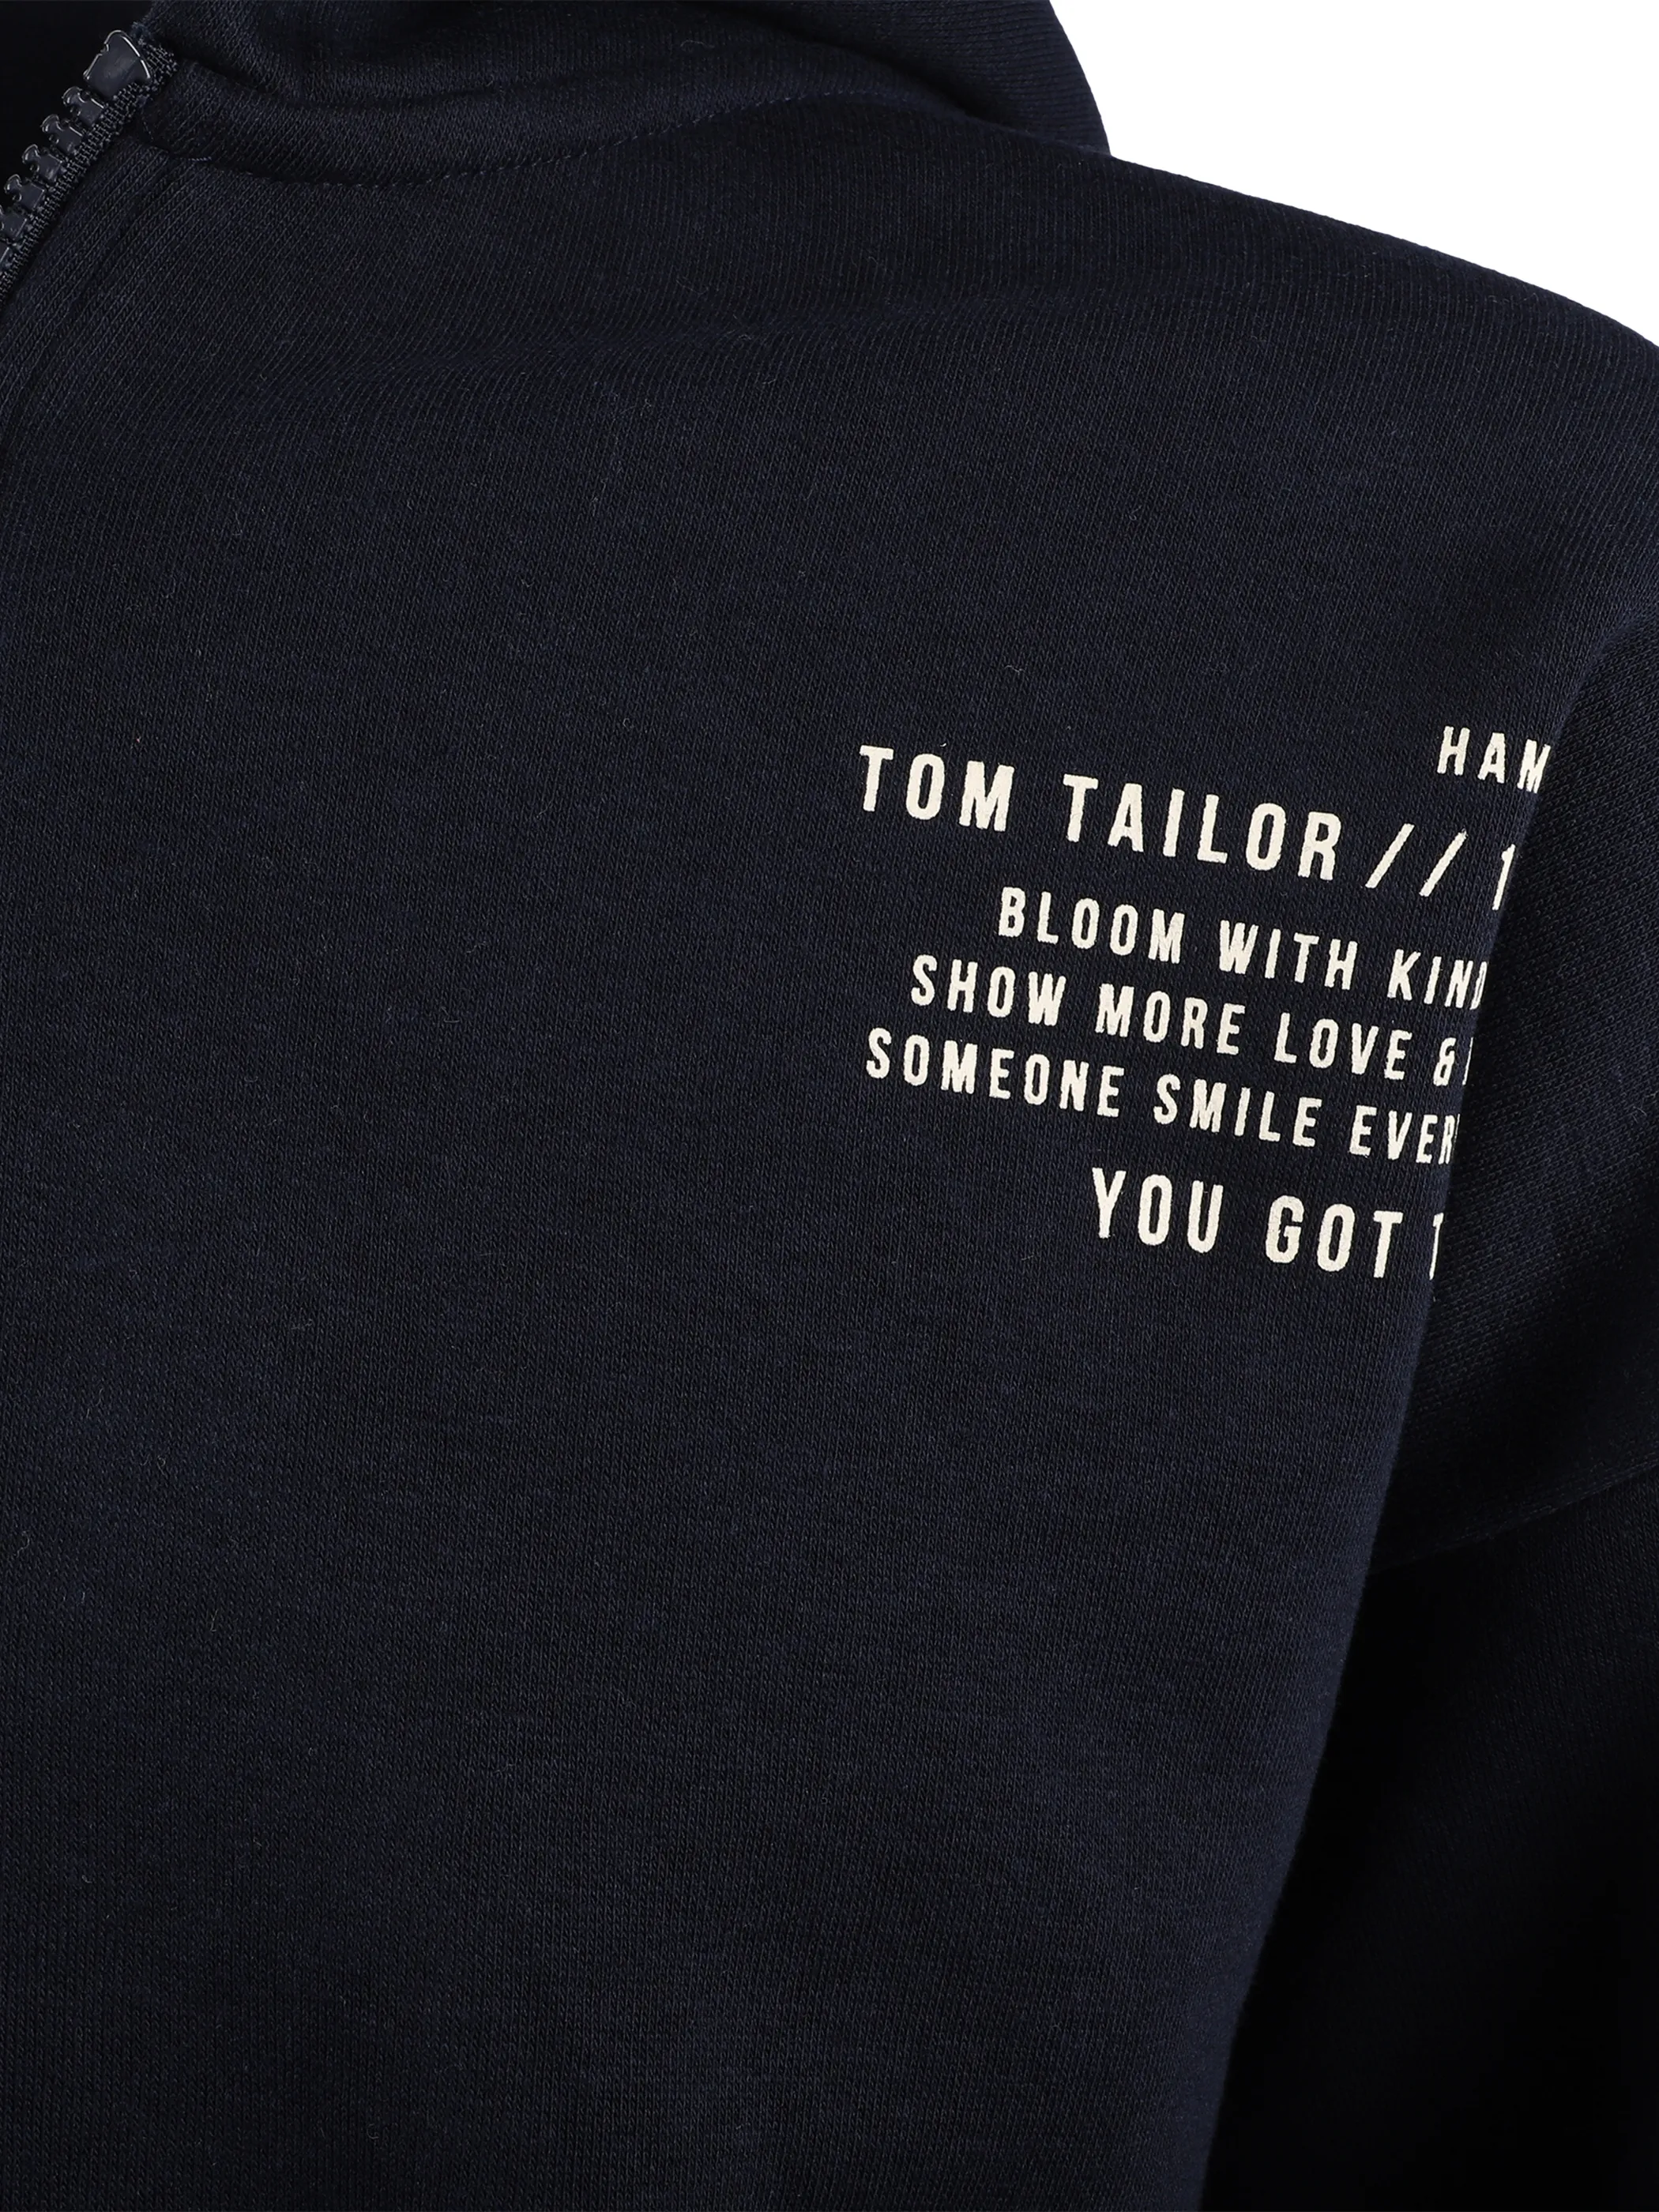 Tom Tailor 1033146 hoody sweat jacket Blau 869667 10668 3